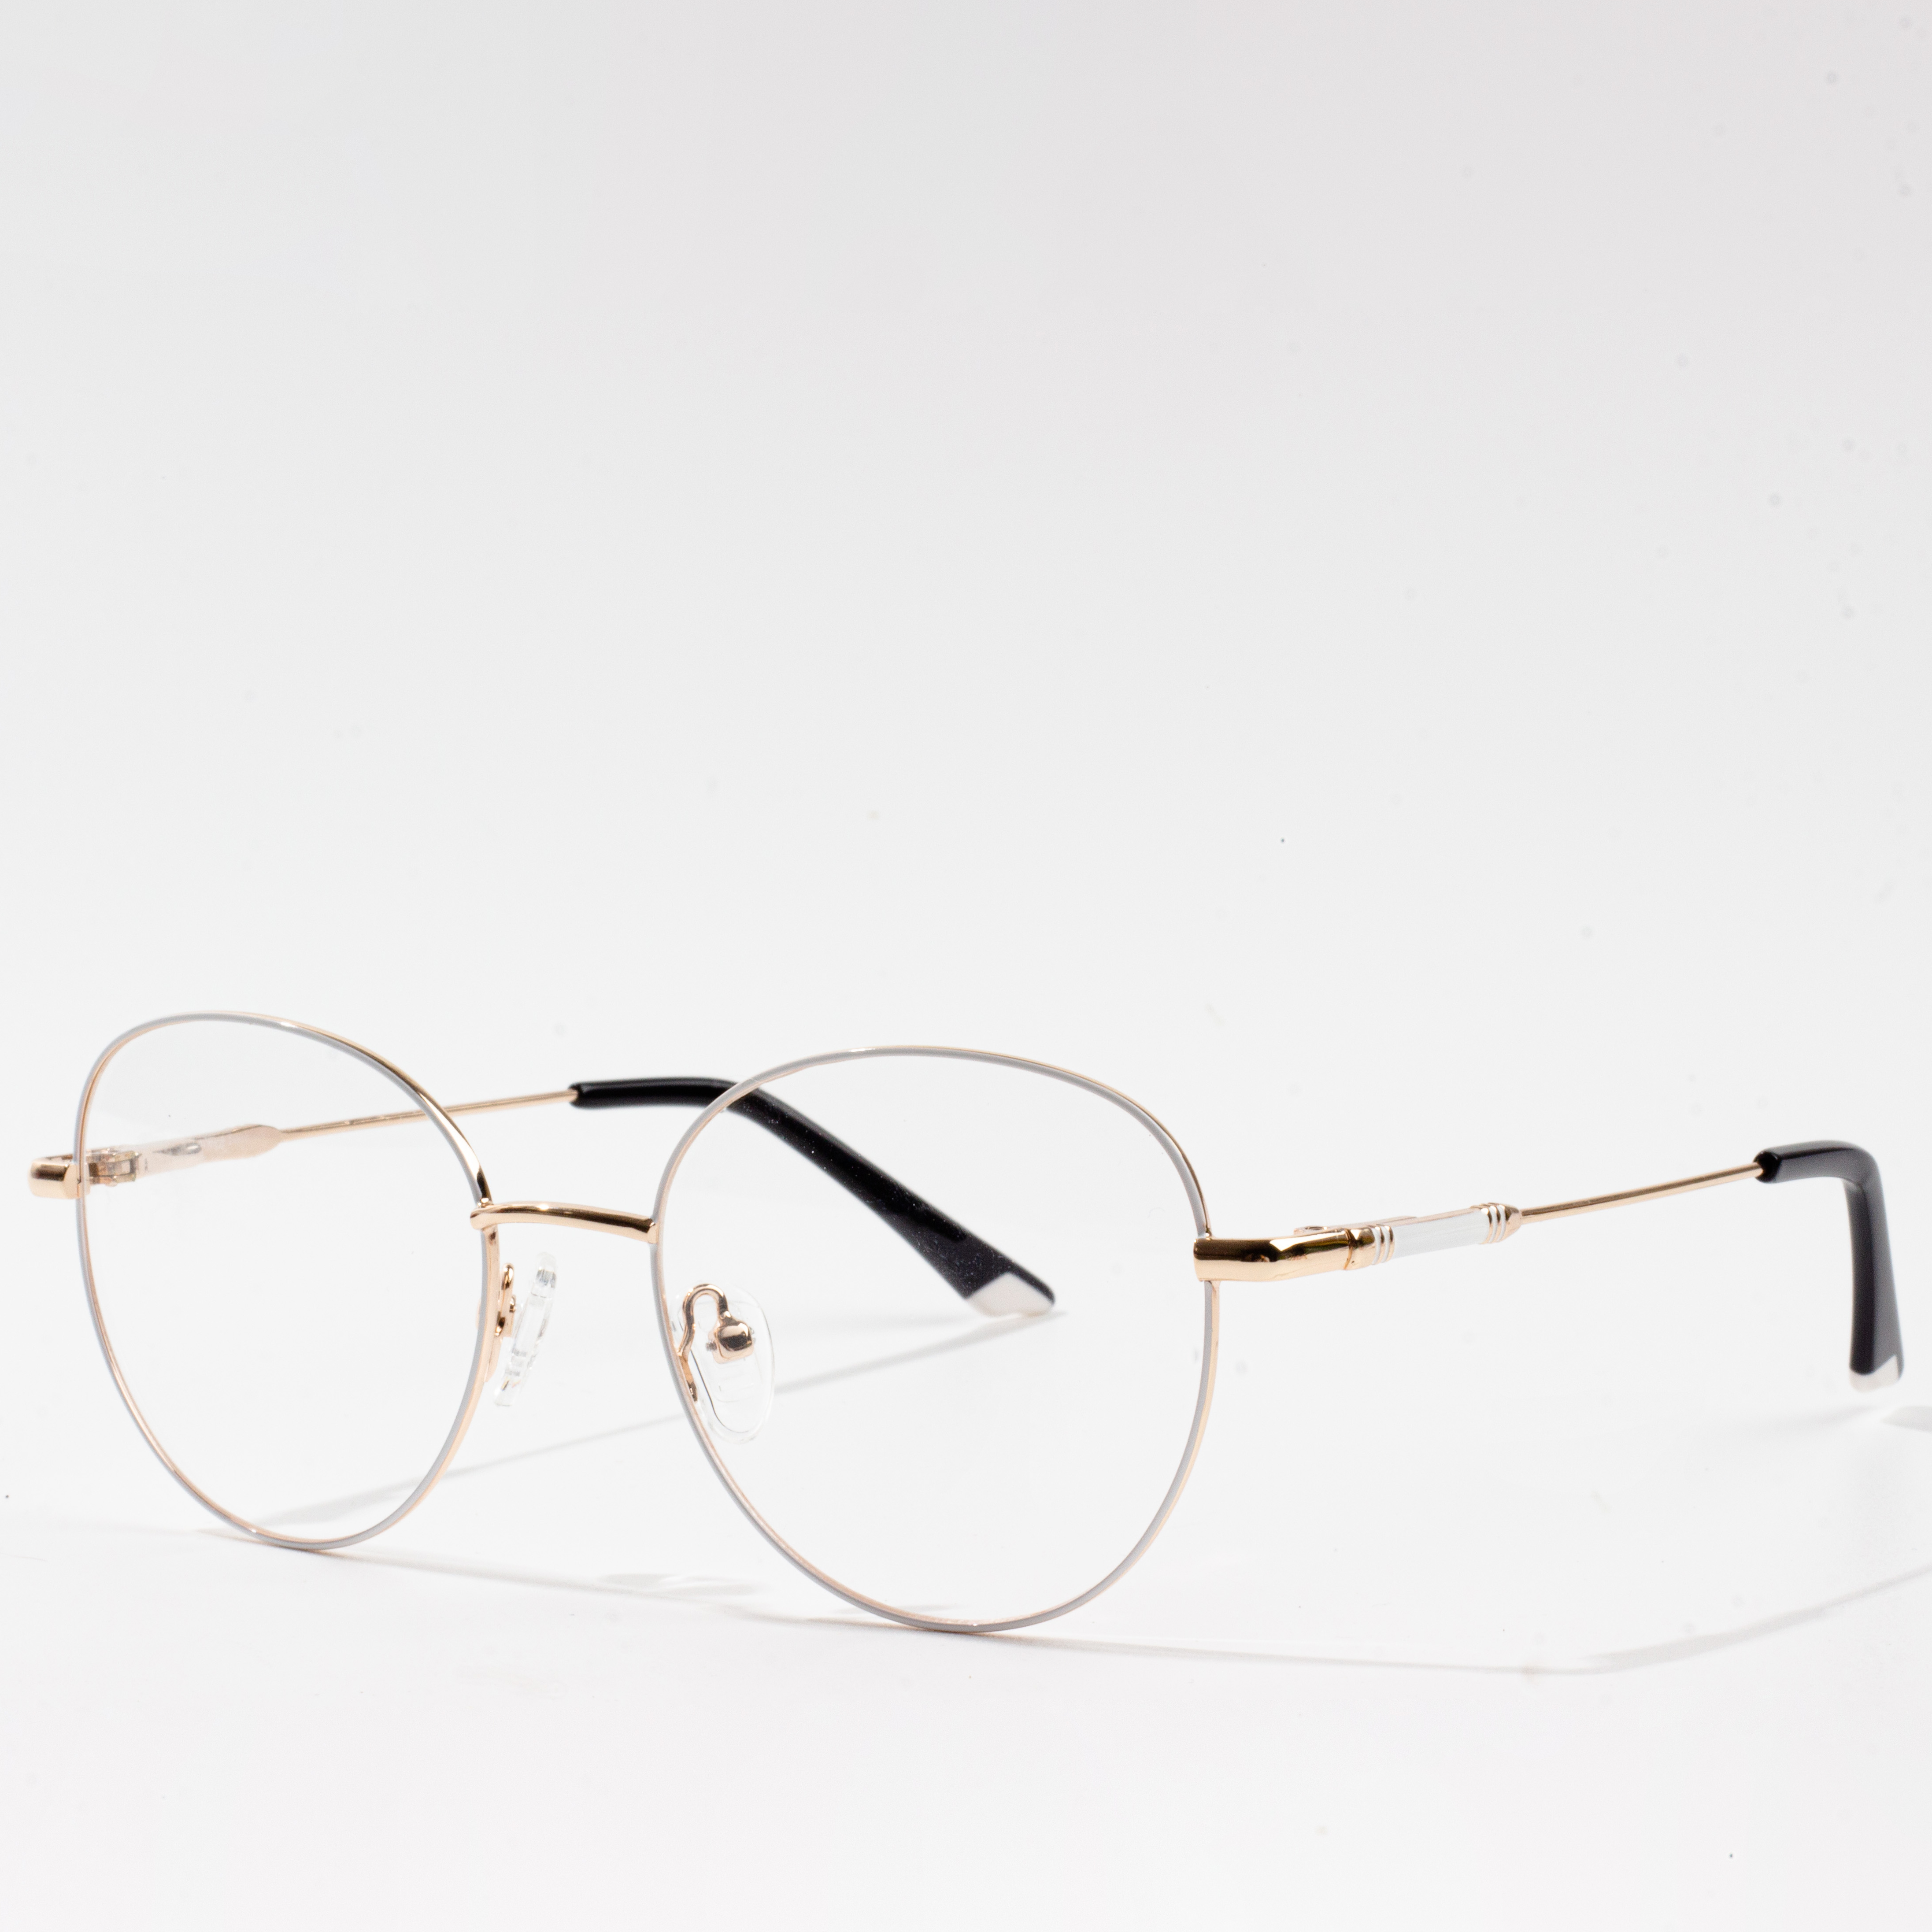 kleurrike bril frames